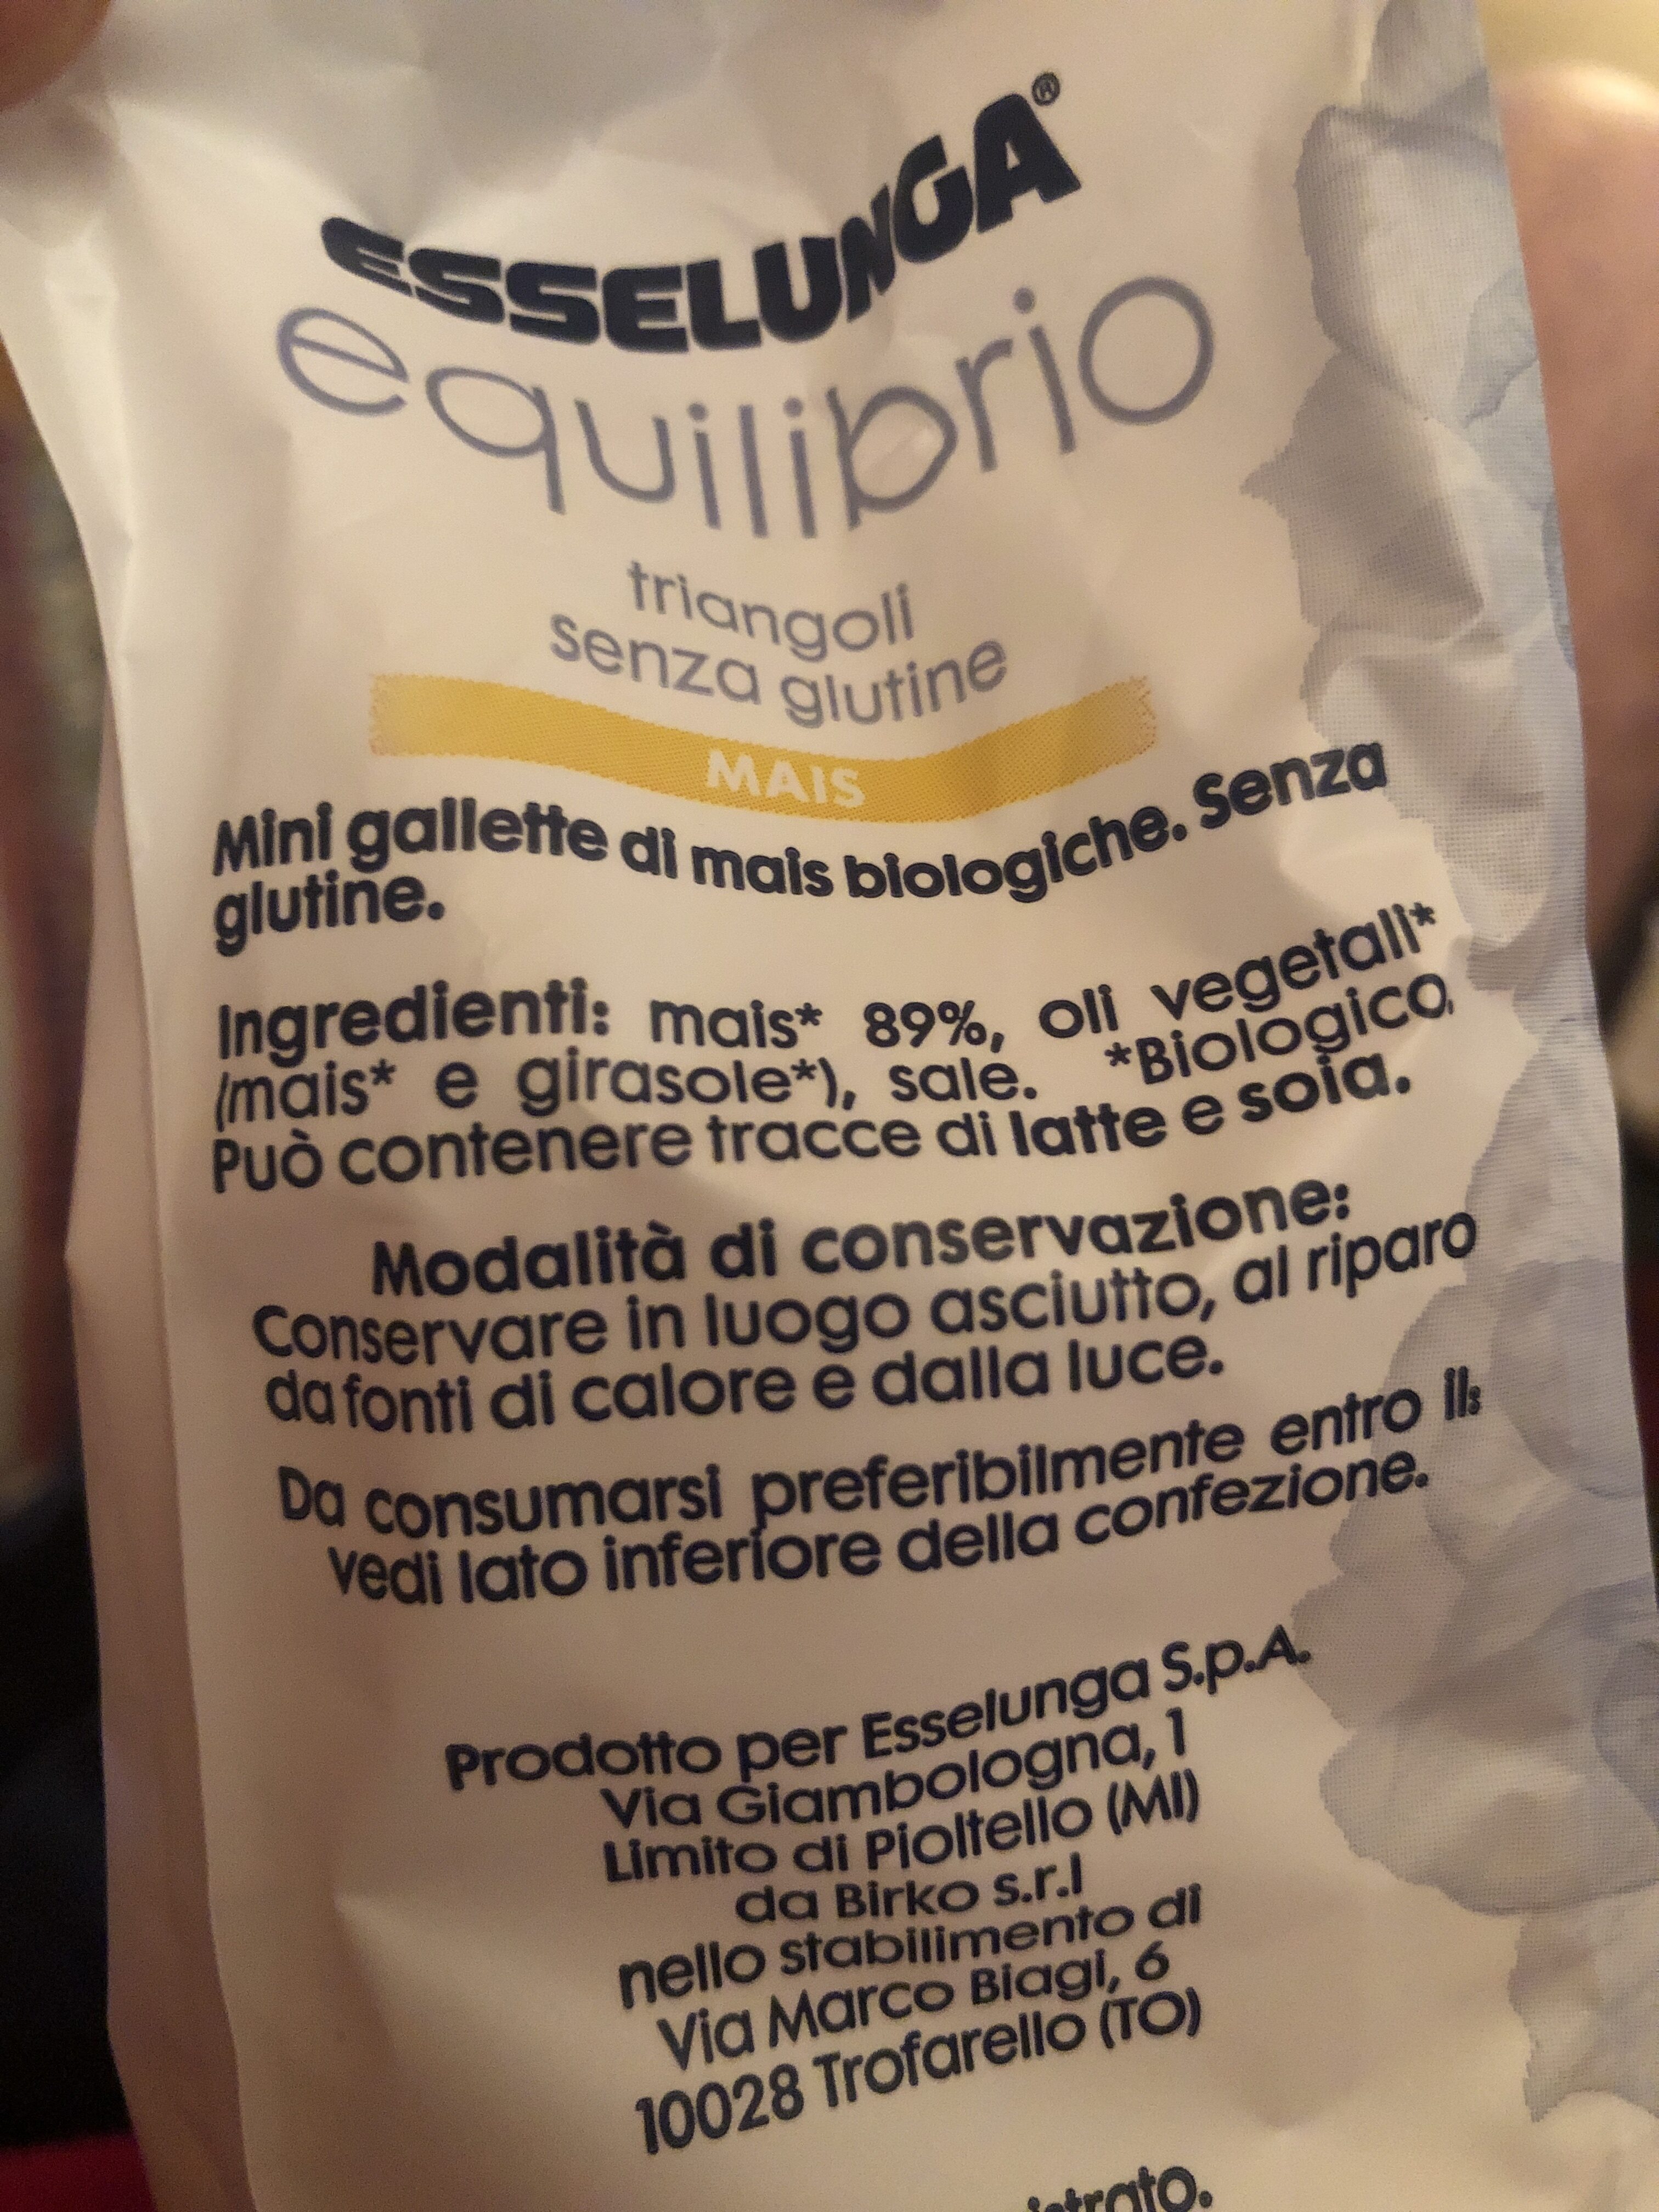 Triangolo senza glutine mais equilibrio Esselunga - Ingredientes - it